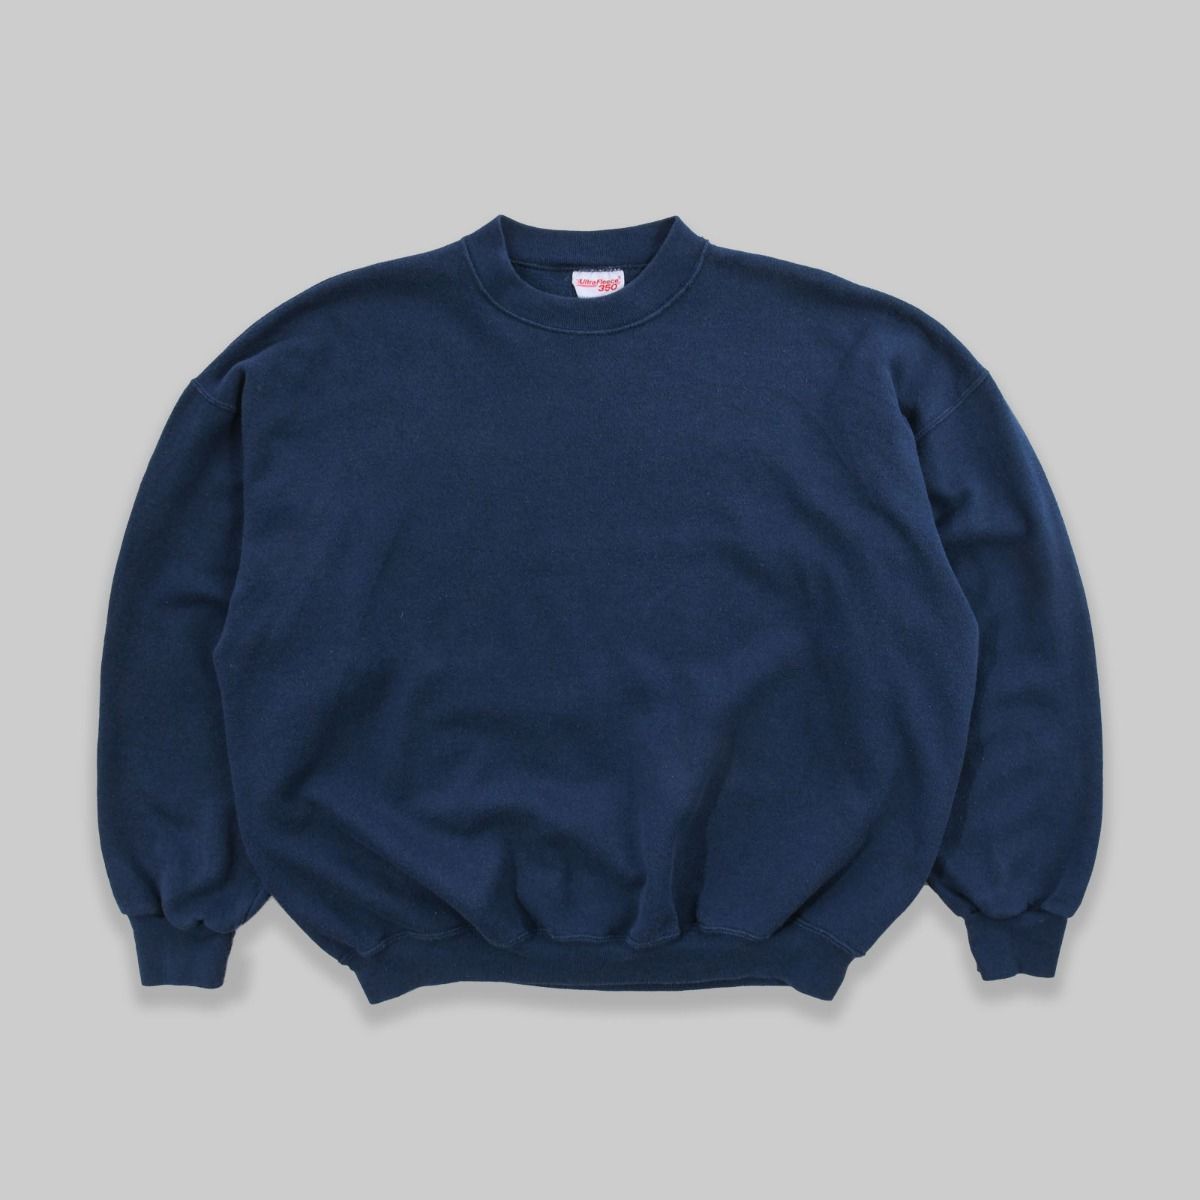 Tultex 1990s Blank Sweatshirt